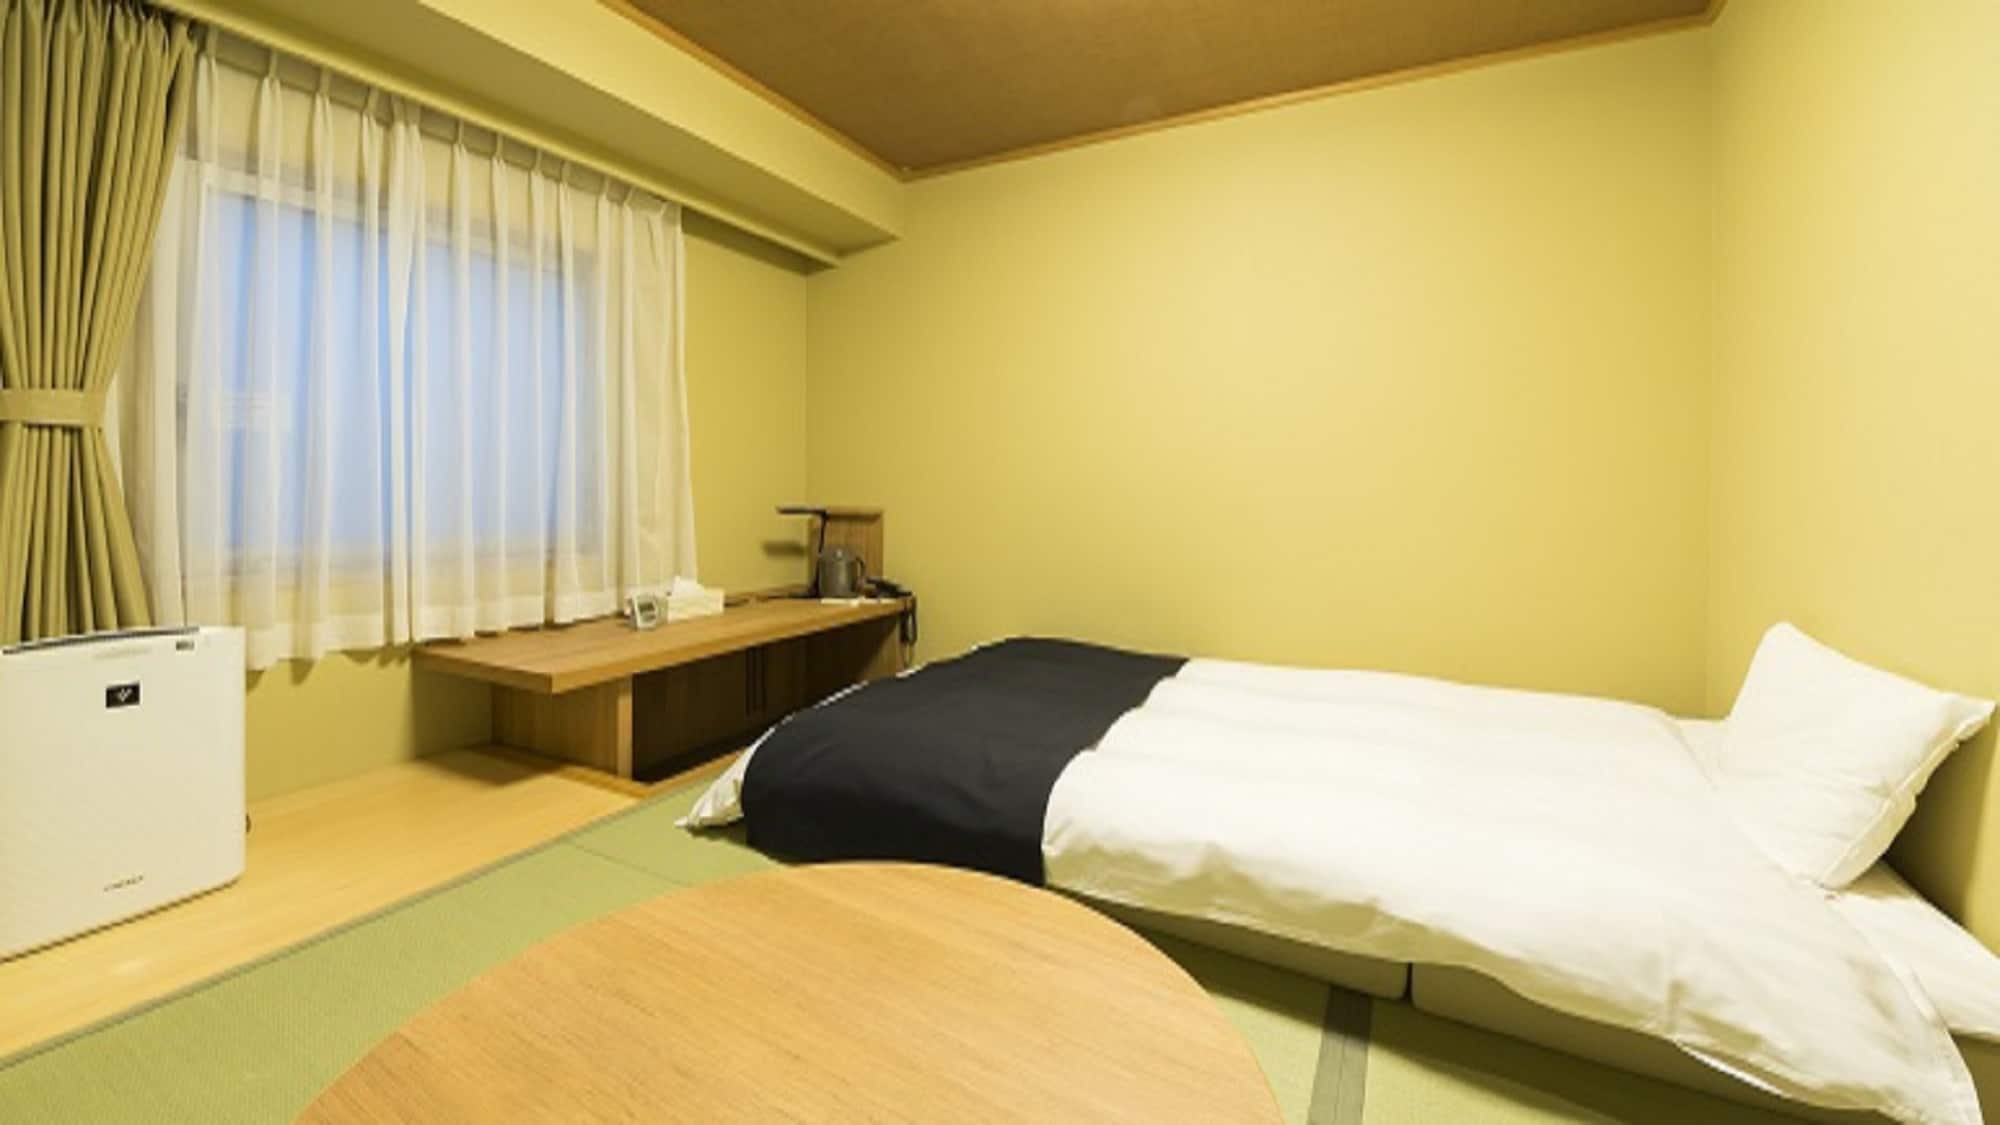 ◆ Non-smoking Japanese-style single room 11.5 square meters futon 26-inch TV